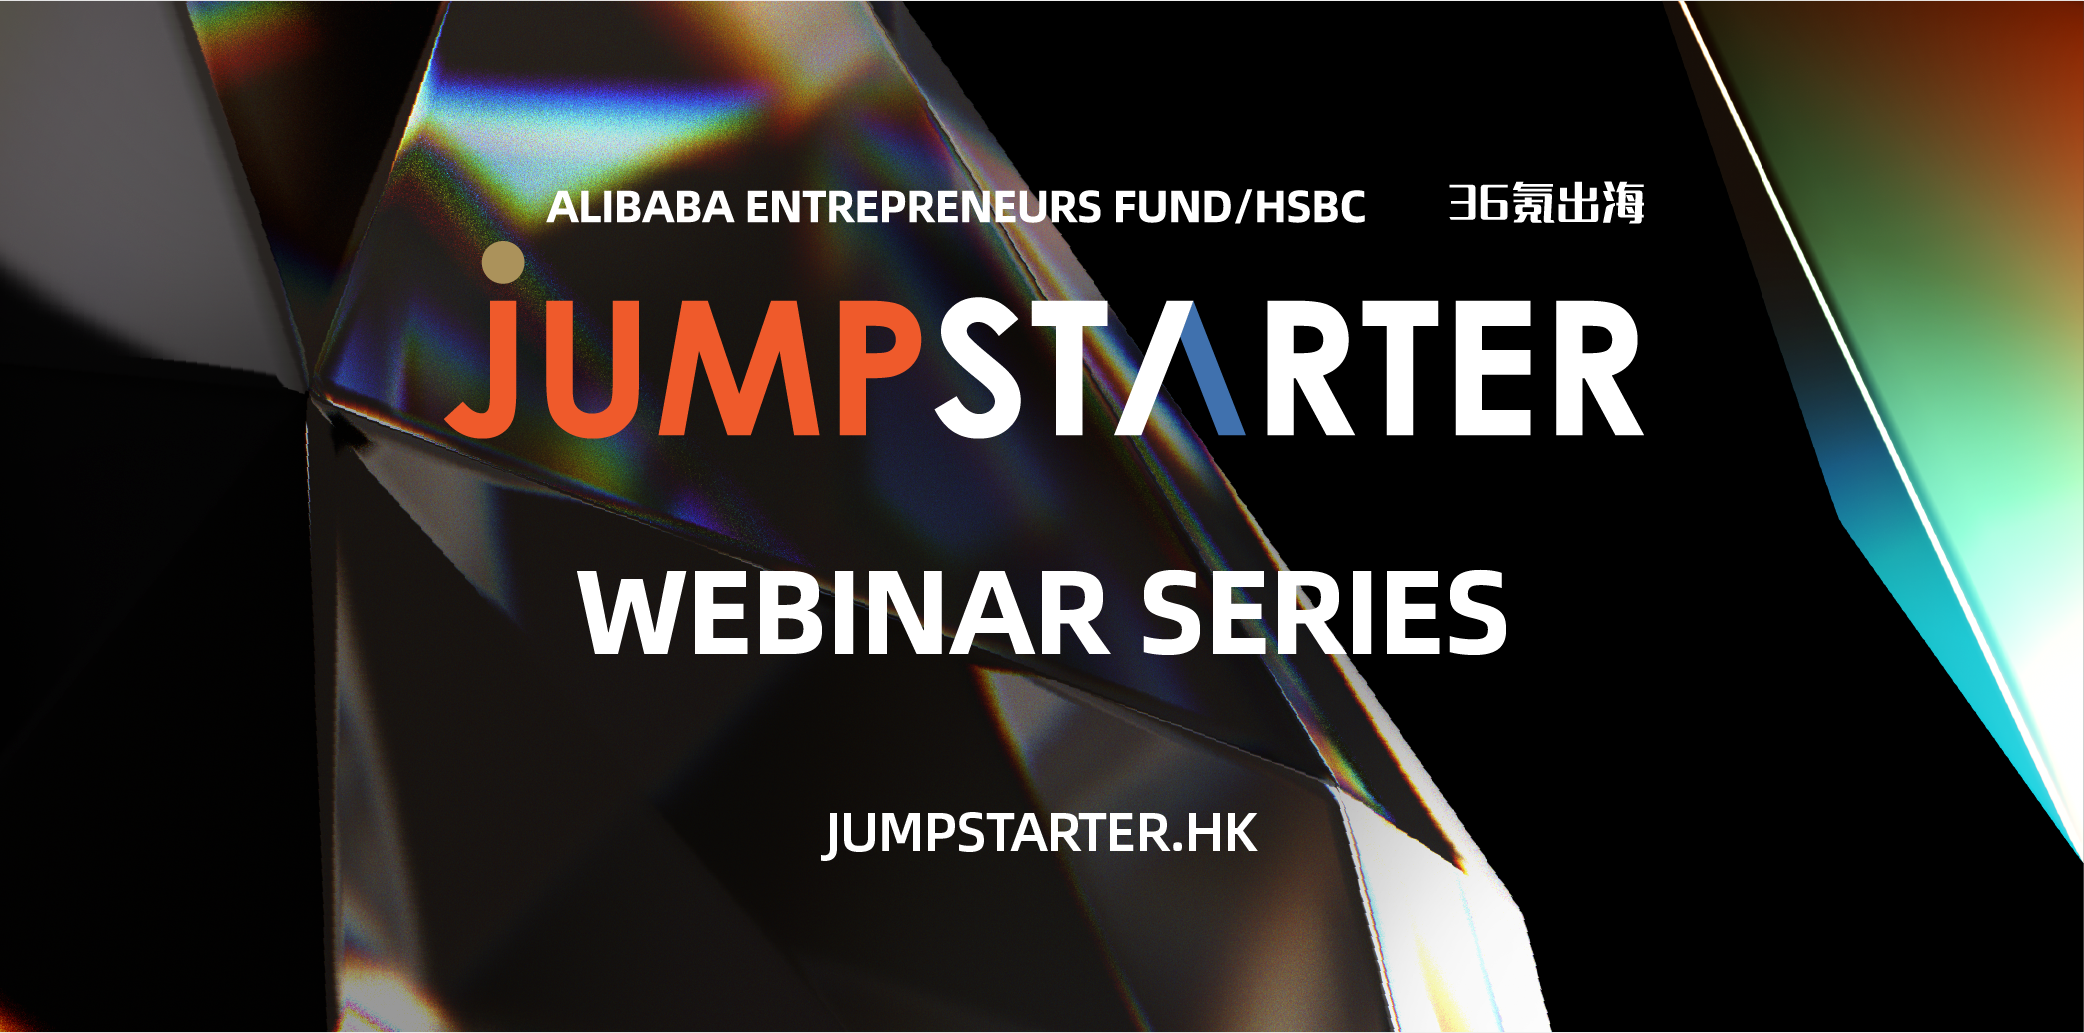 Alibaba Entrepreneurs Fund / HSBC JUMPSTARTER 2022 webinars to be held November 1 to 5